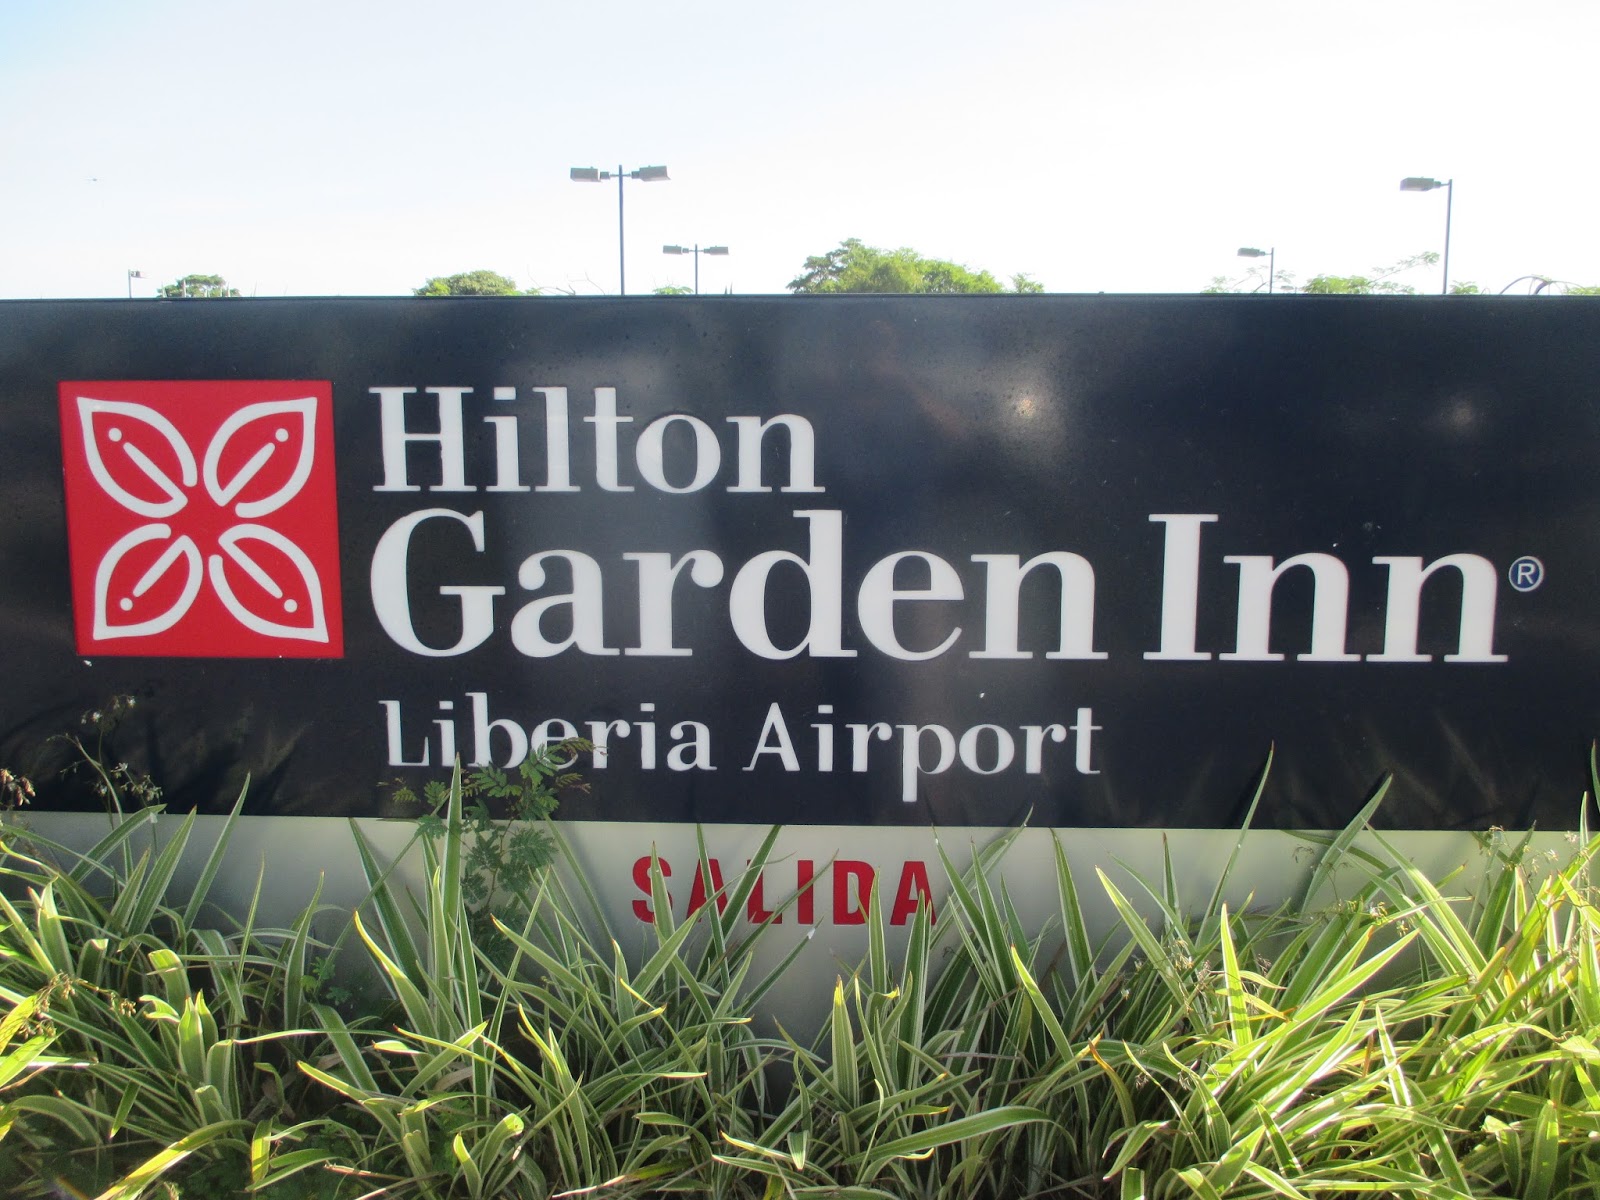 Hilton Garden Inn Liberia Airport, Liberia